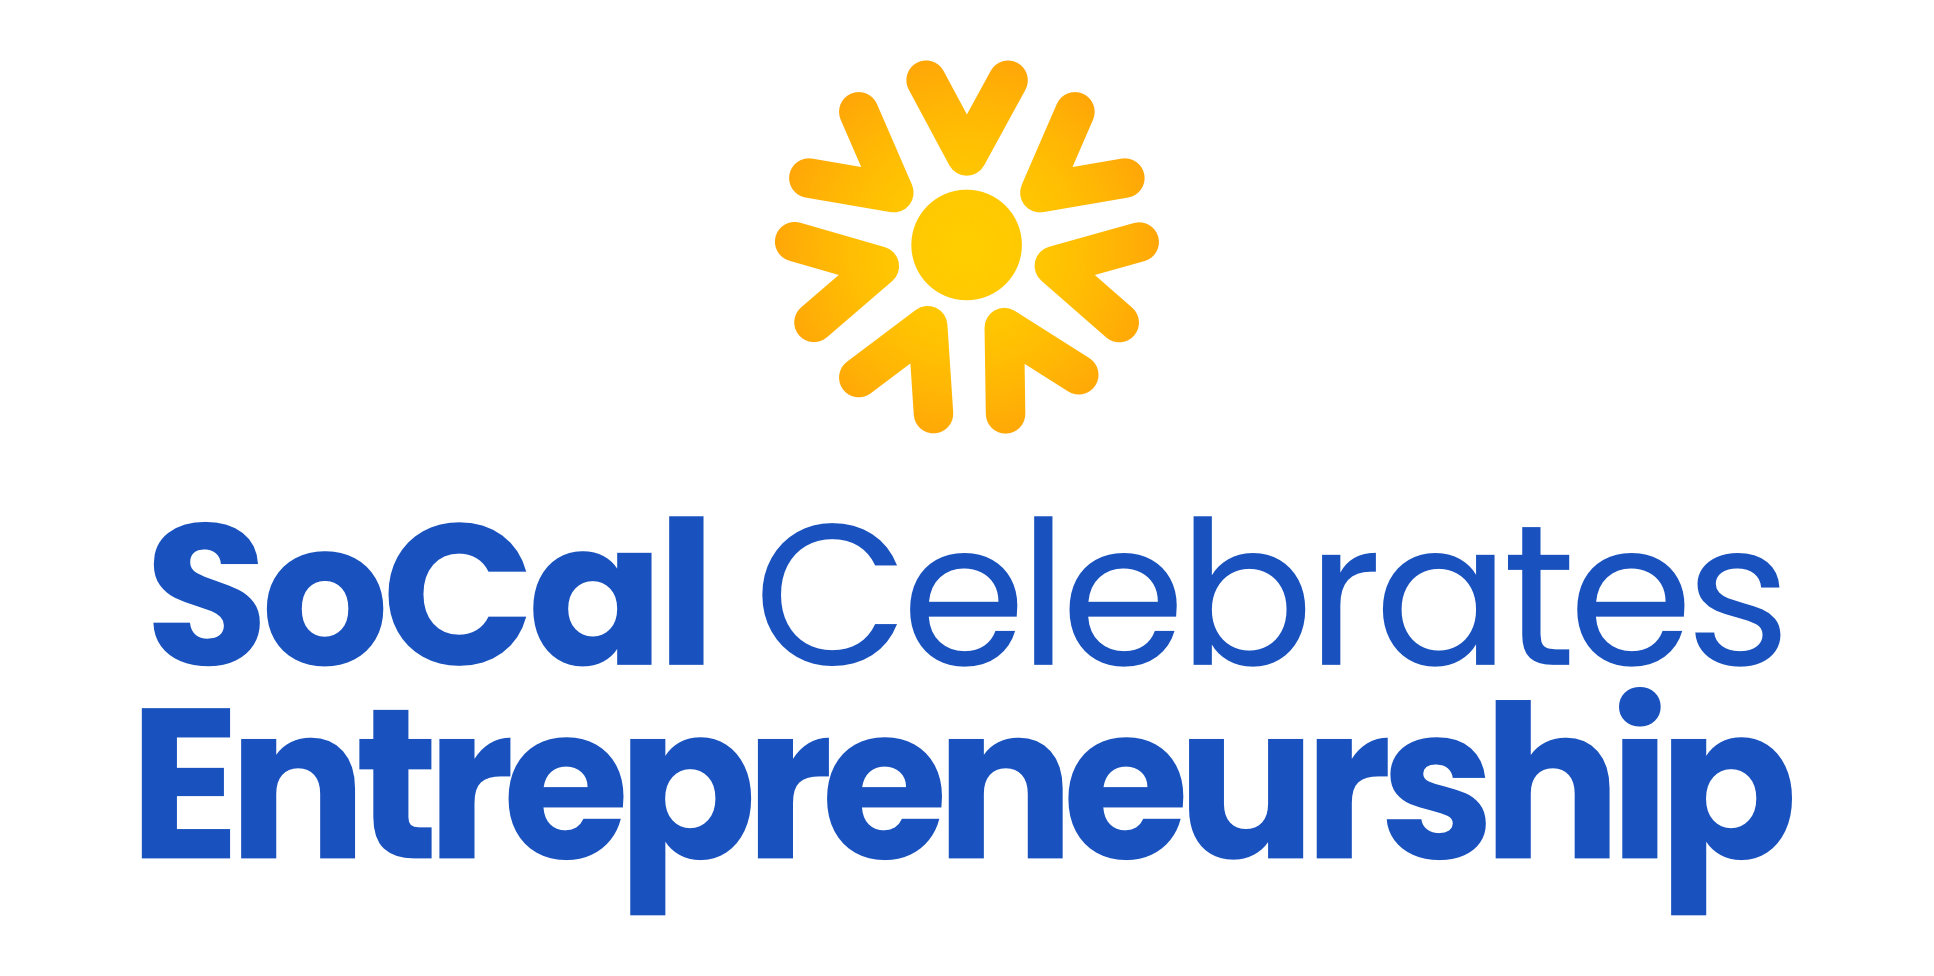 SoCal Celebrates Entrepreneurship